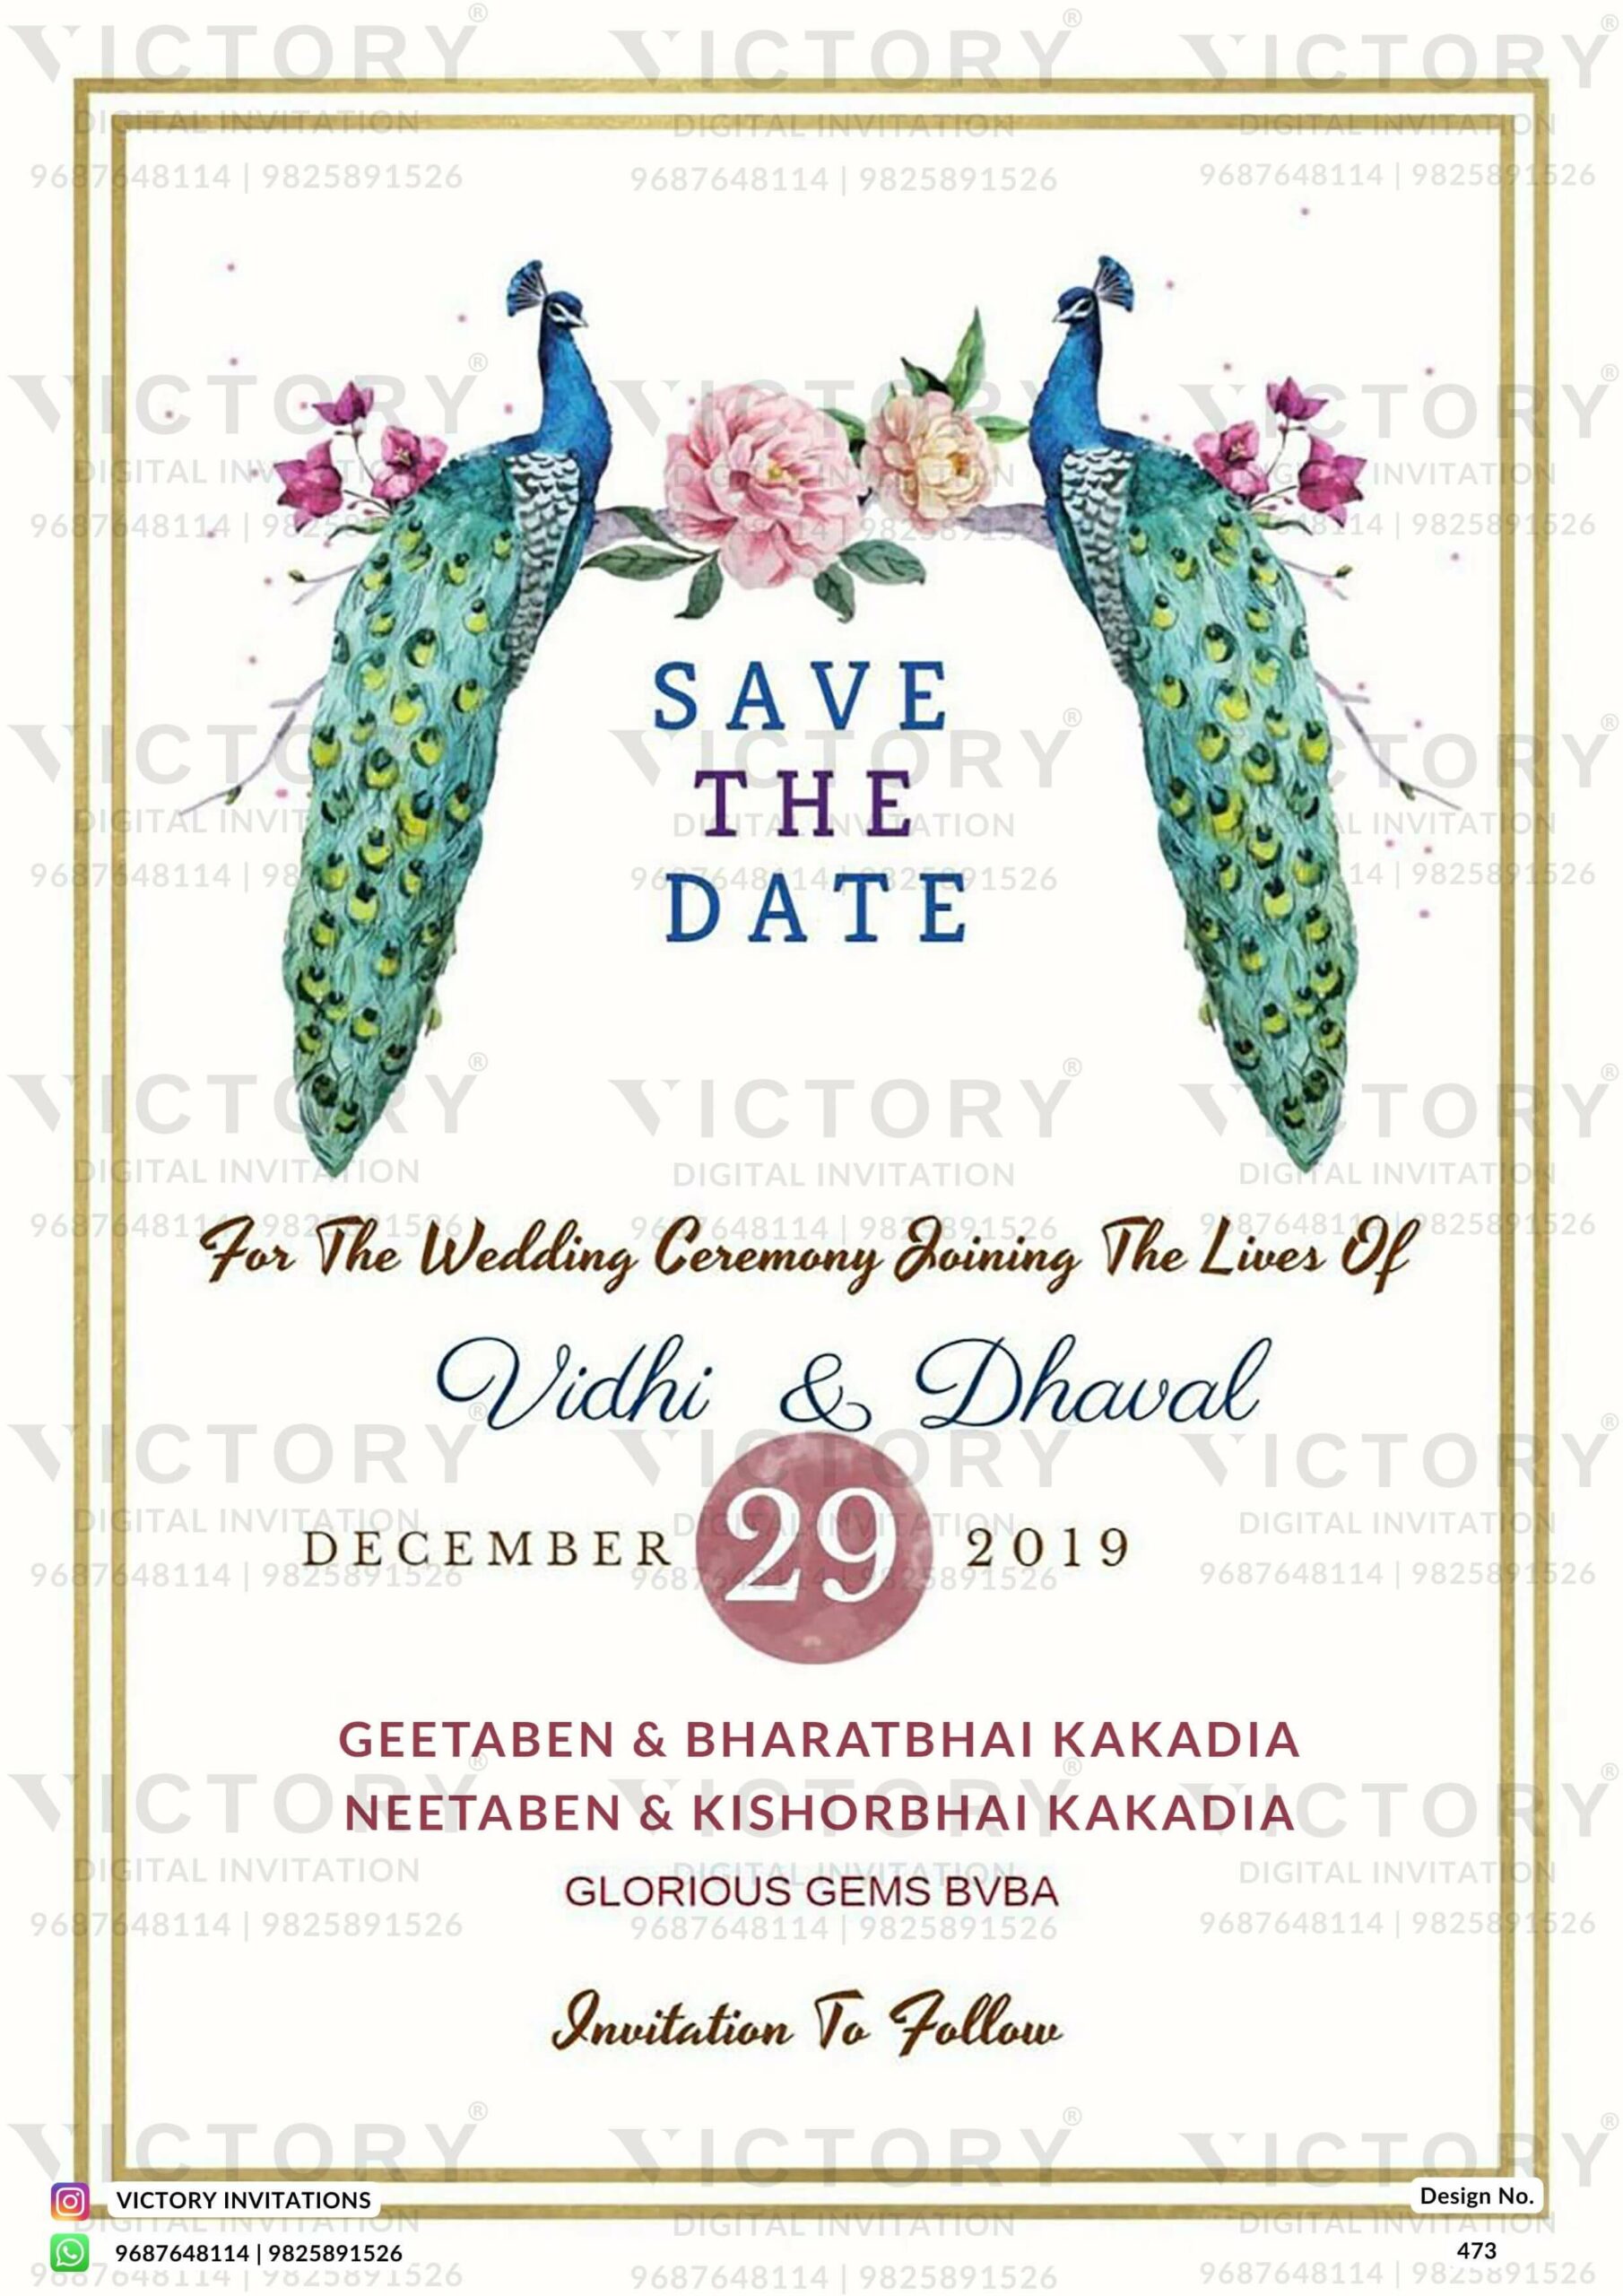 Save the Date digital invitation card design no.473